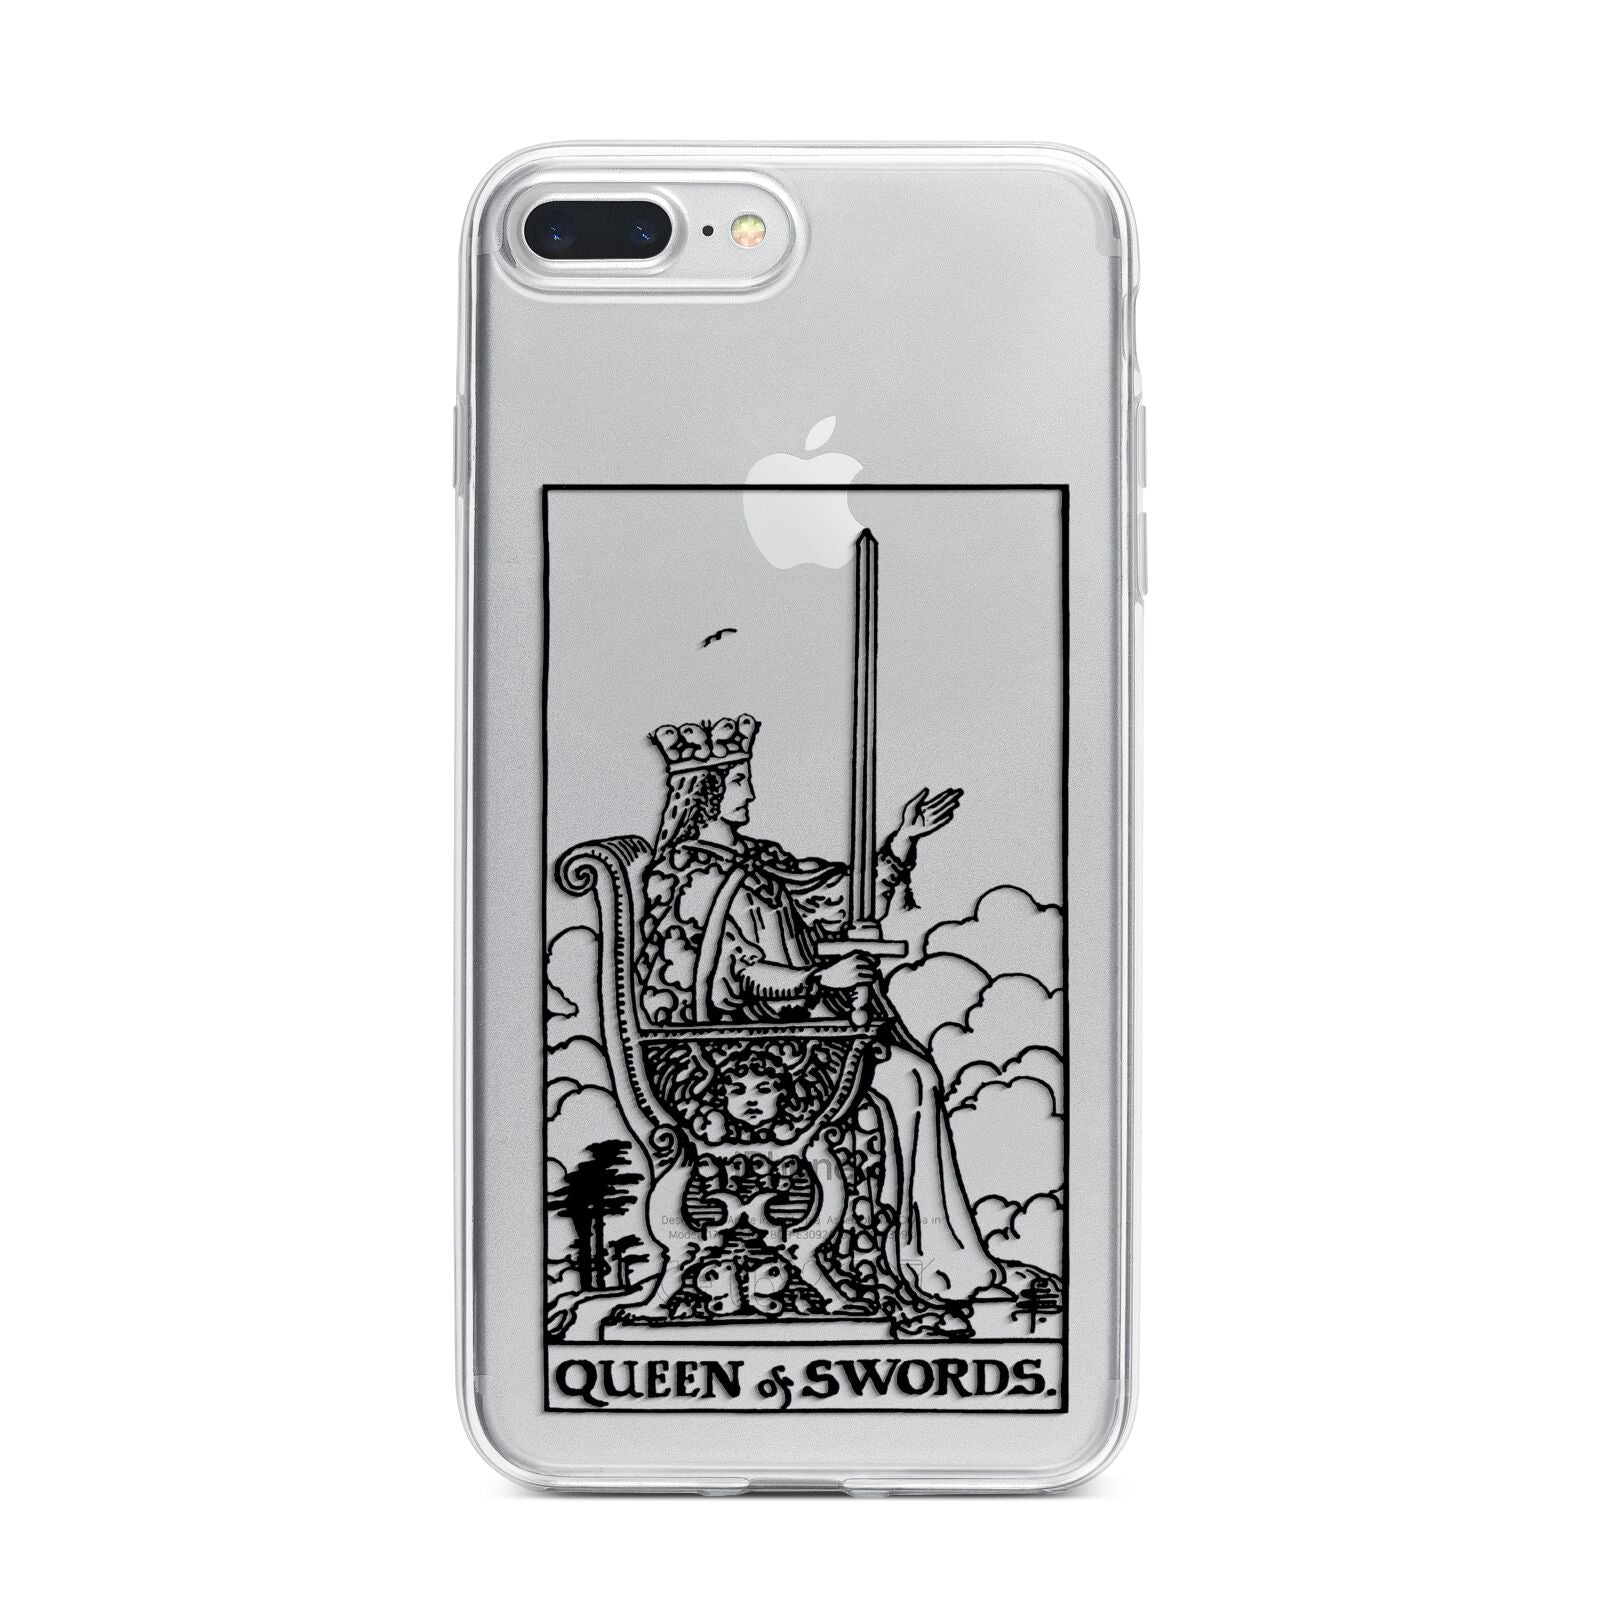 Queen of Swords Monochrome iPhone 7 Plus Bumper Case on Silver iPhone